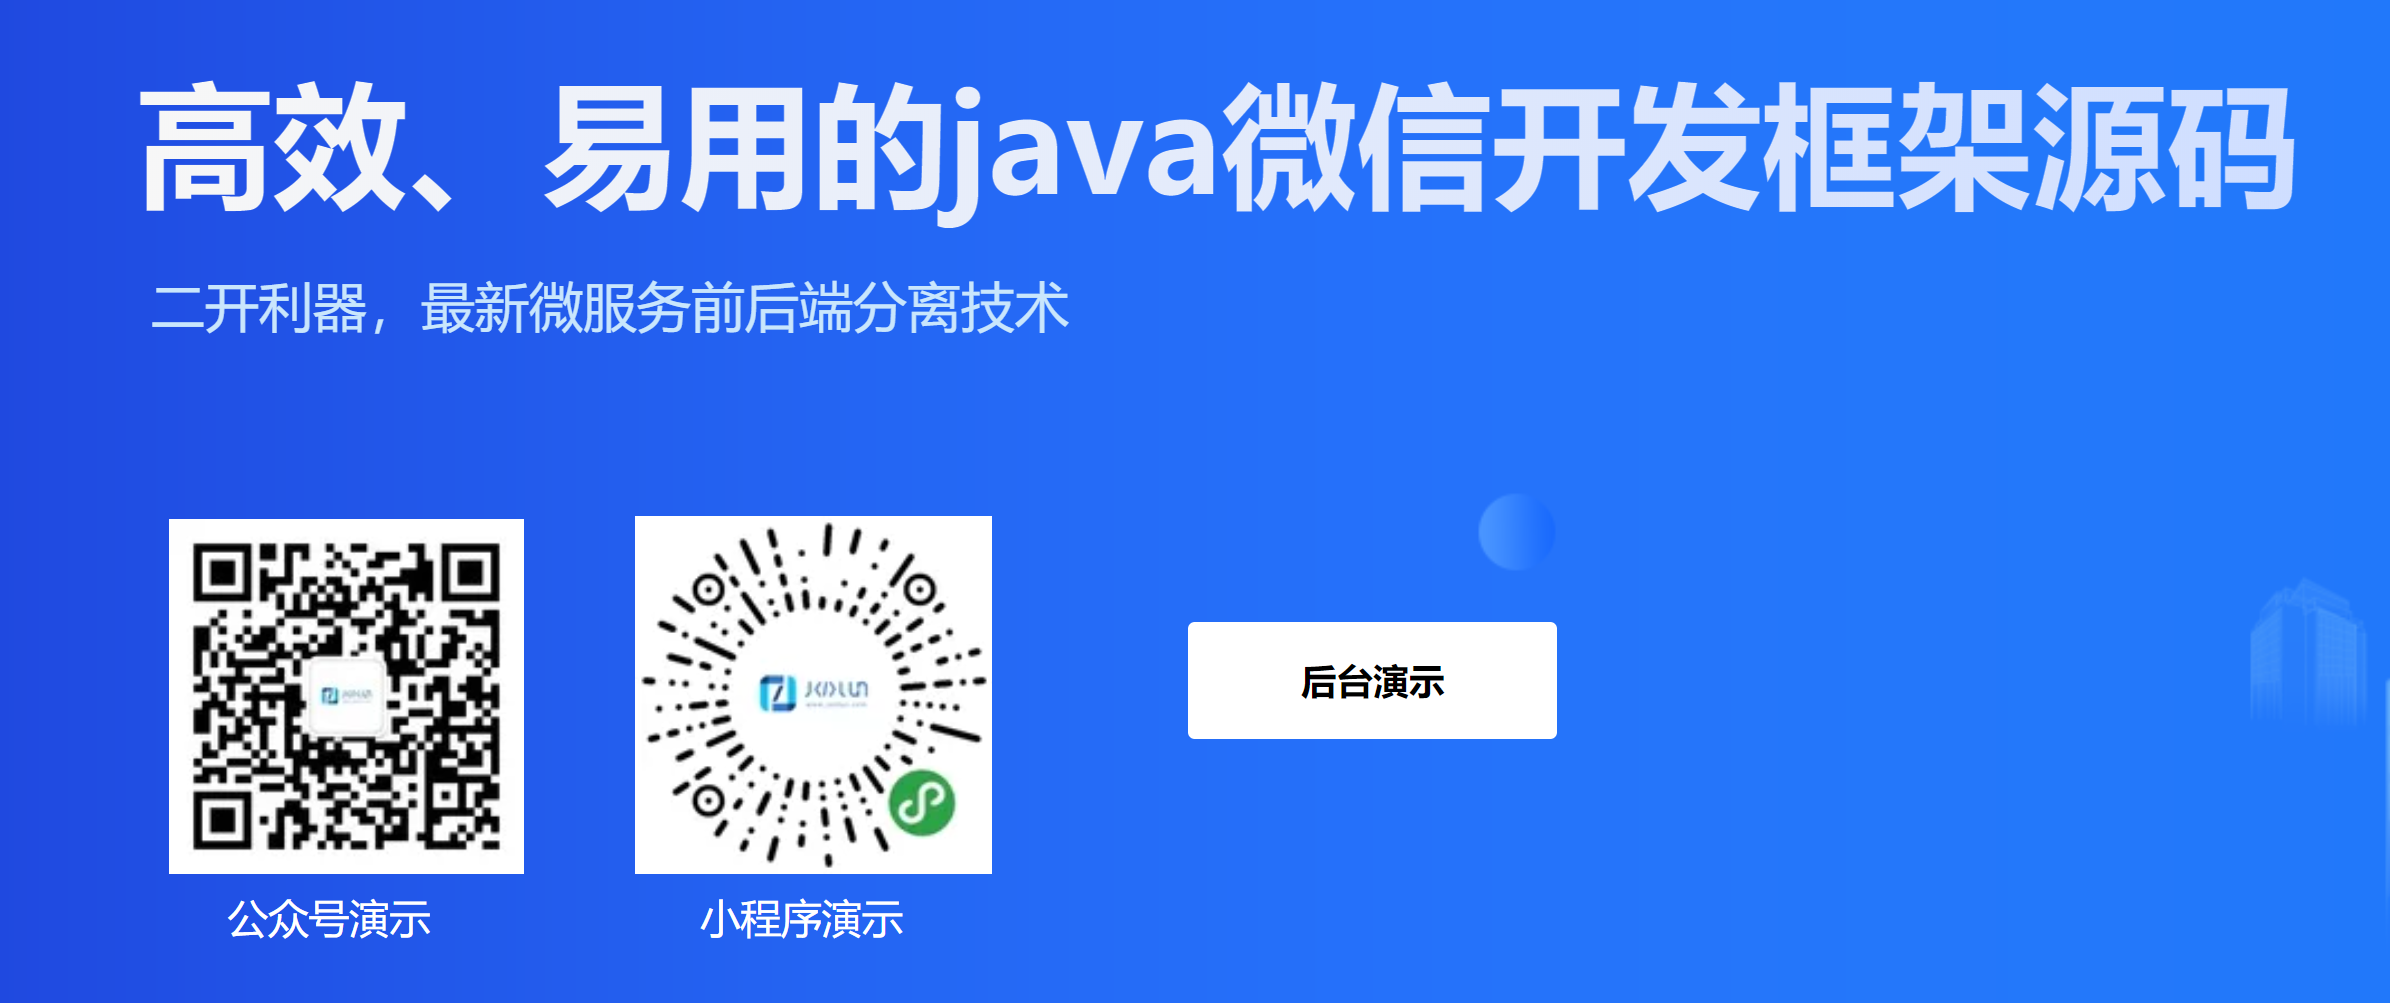 Java微服务的微信开发框架前后端的演示环境预览-JooLun